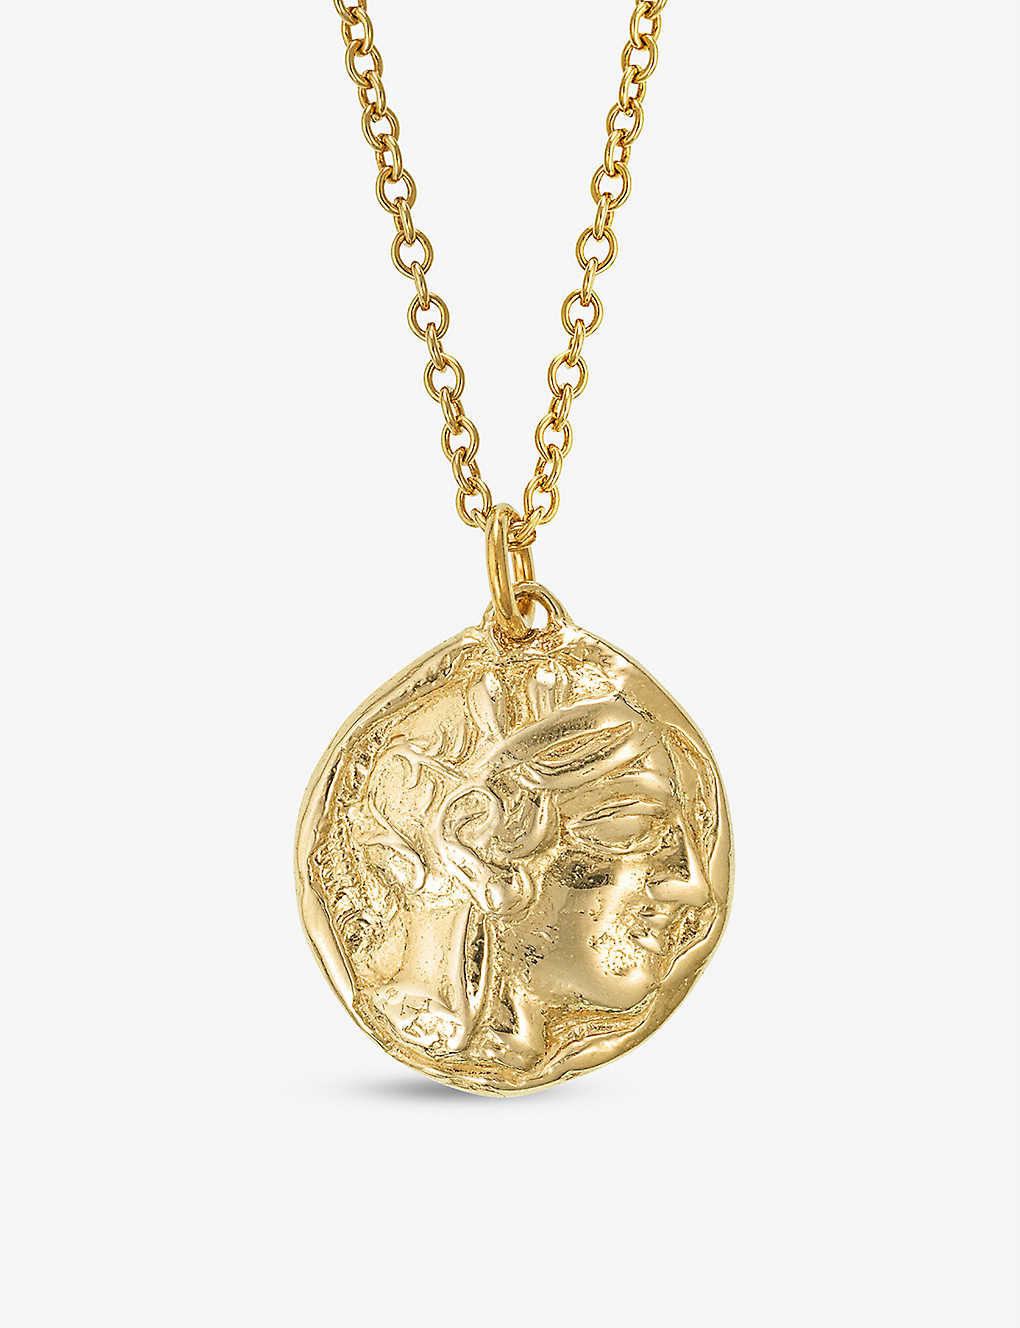 La Maison Couture Deborah Blyth Goddess 24ct Yellow Gold-plated Vermeil Sterling-silver Pendant Necklace